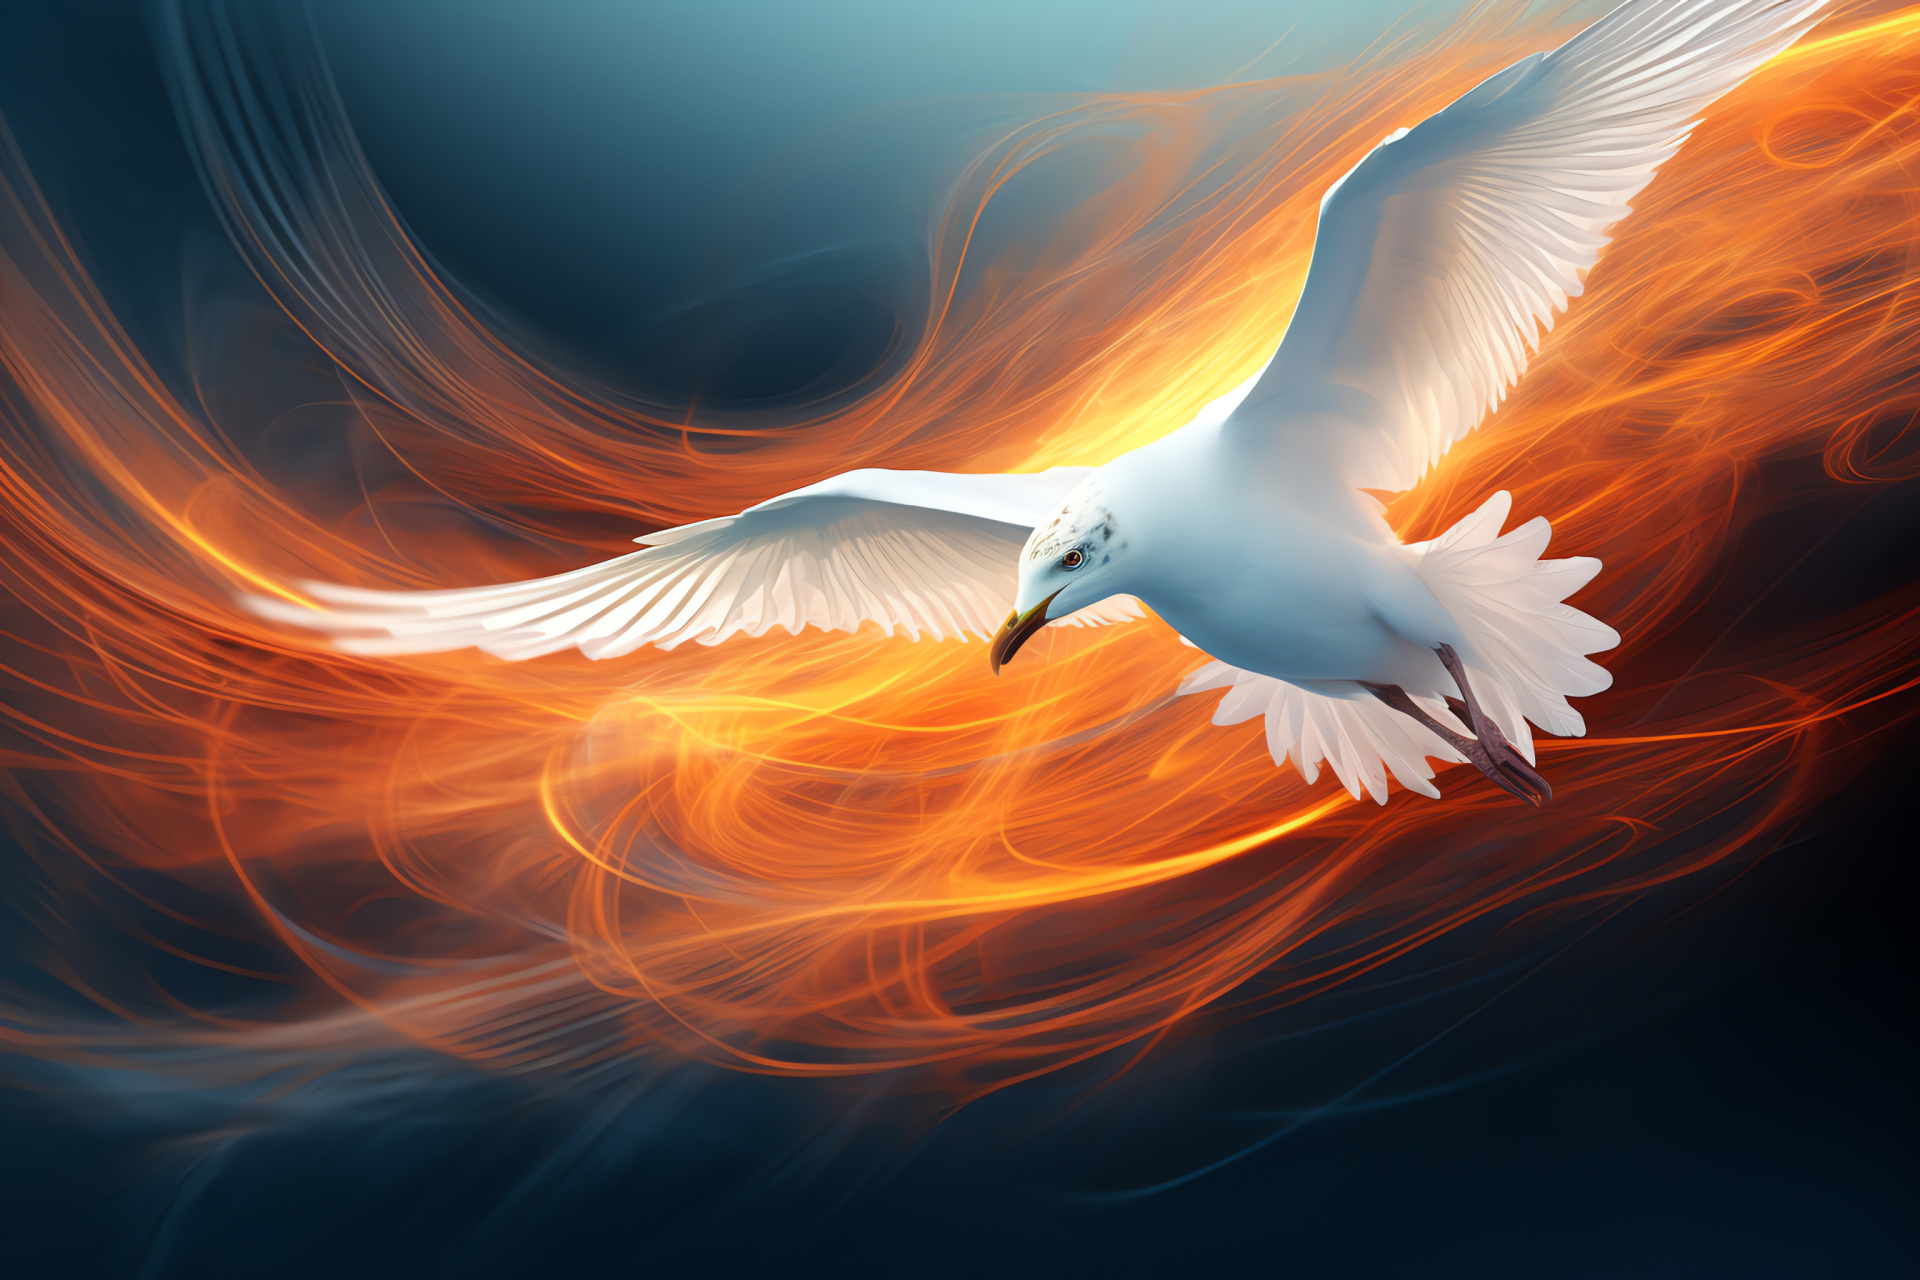 Seagull, Feather texture, Ornithological subject, Orange bill, Patterned swirl, HD Desktop Image